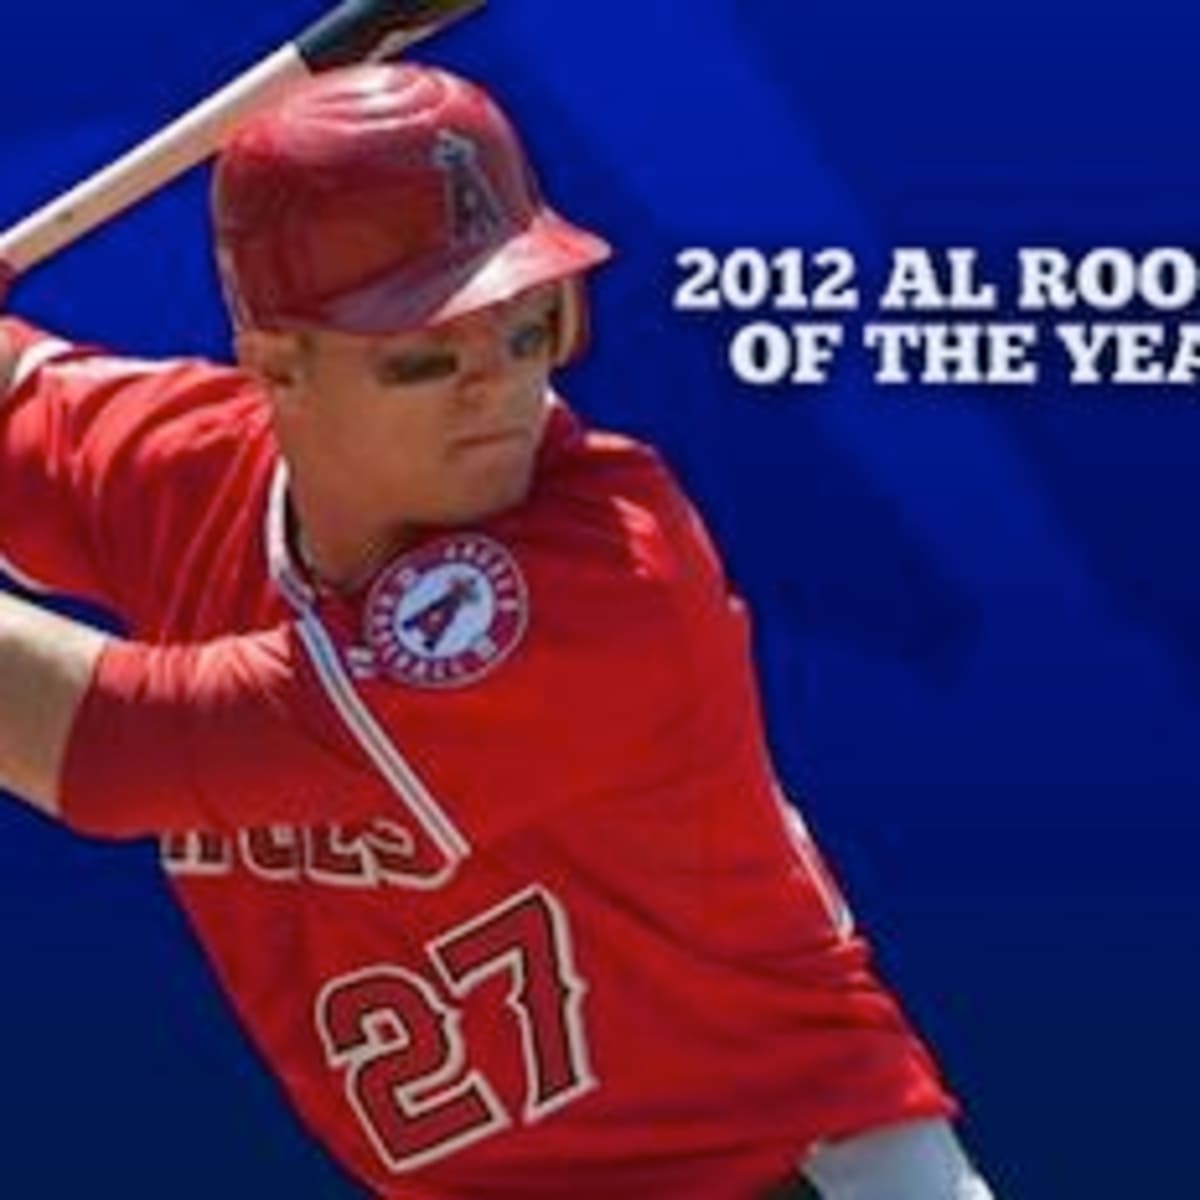 2012 MLB Rookies: Bryce Harper, Mike Trout, Yoenis Cespedes, Yu